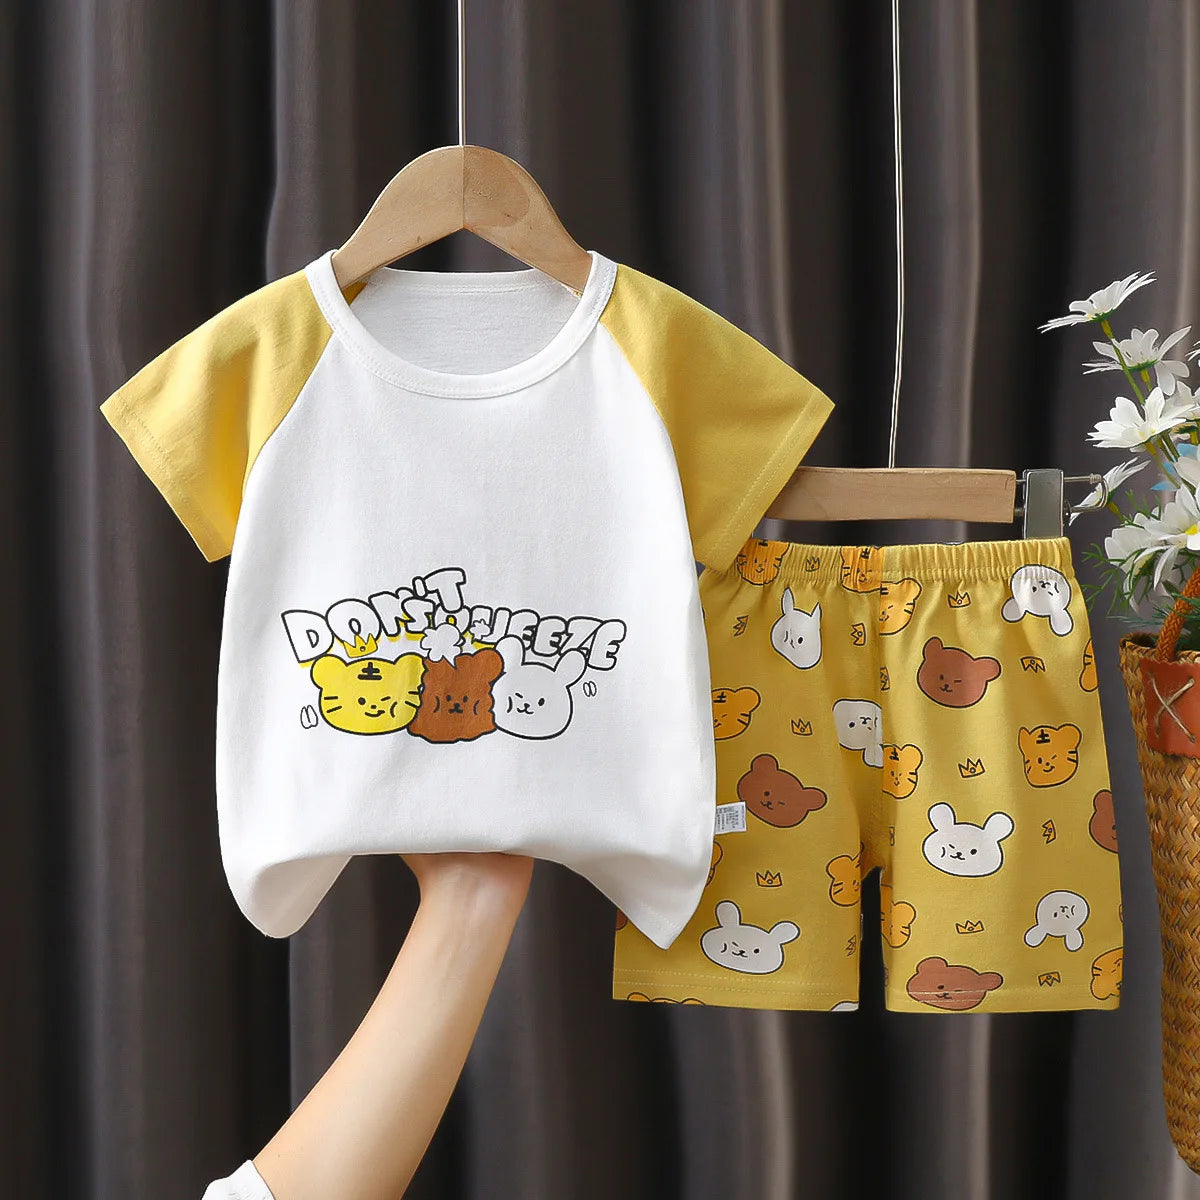 Summer Baby Boy 2-Piece Set - Cartoon Print Cotton Outfit